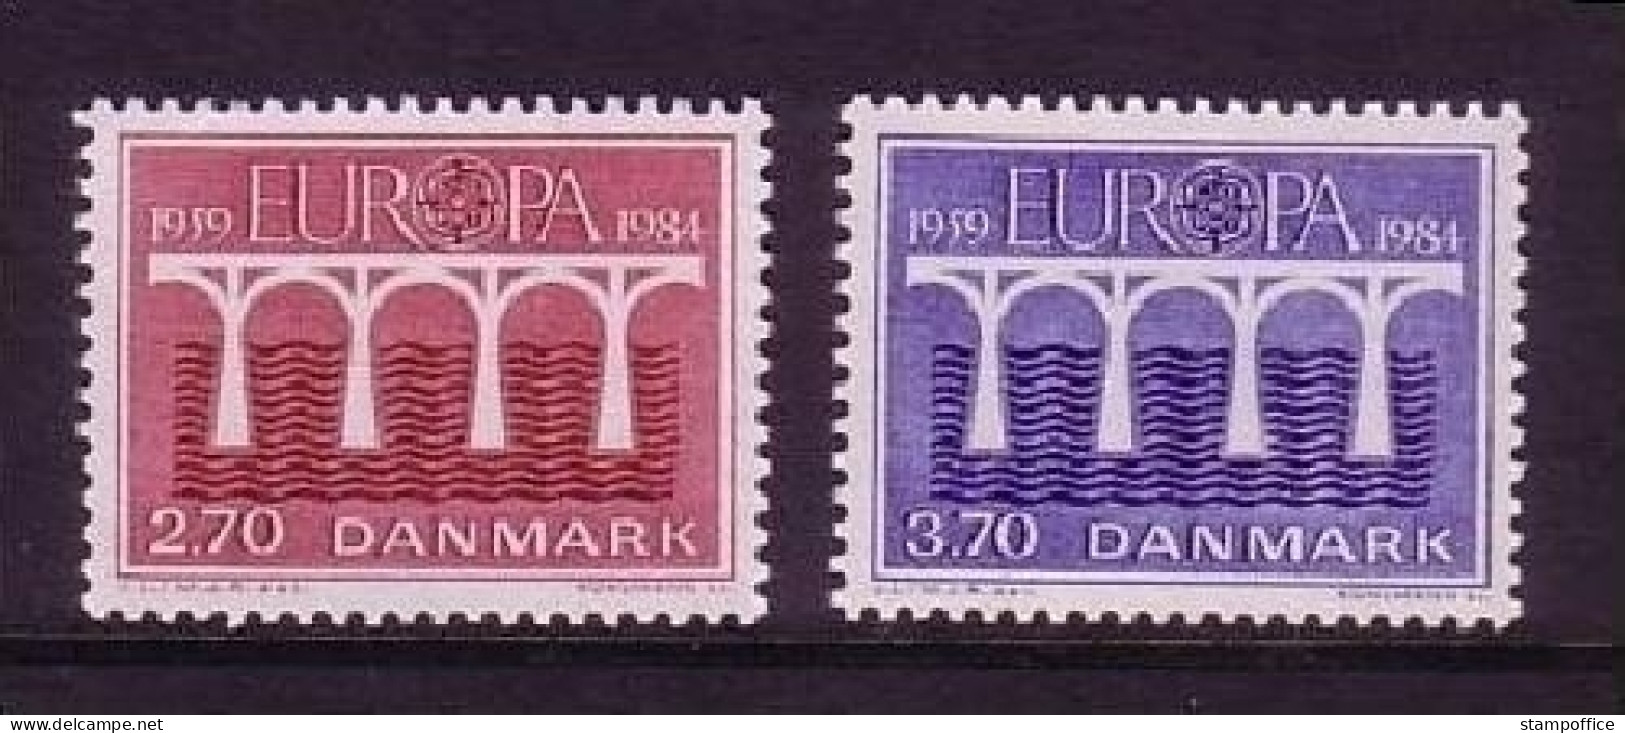 DÄNEMARK MI-NR. 806-807 POSTFRISCH(MINT) EUROPA 1984 BRÜCKE - 1984